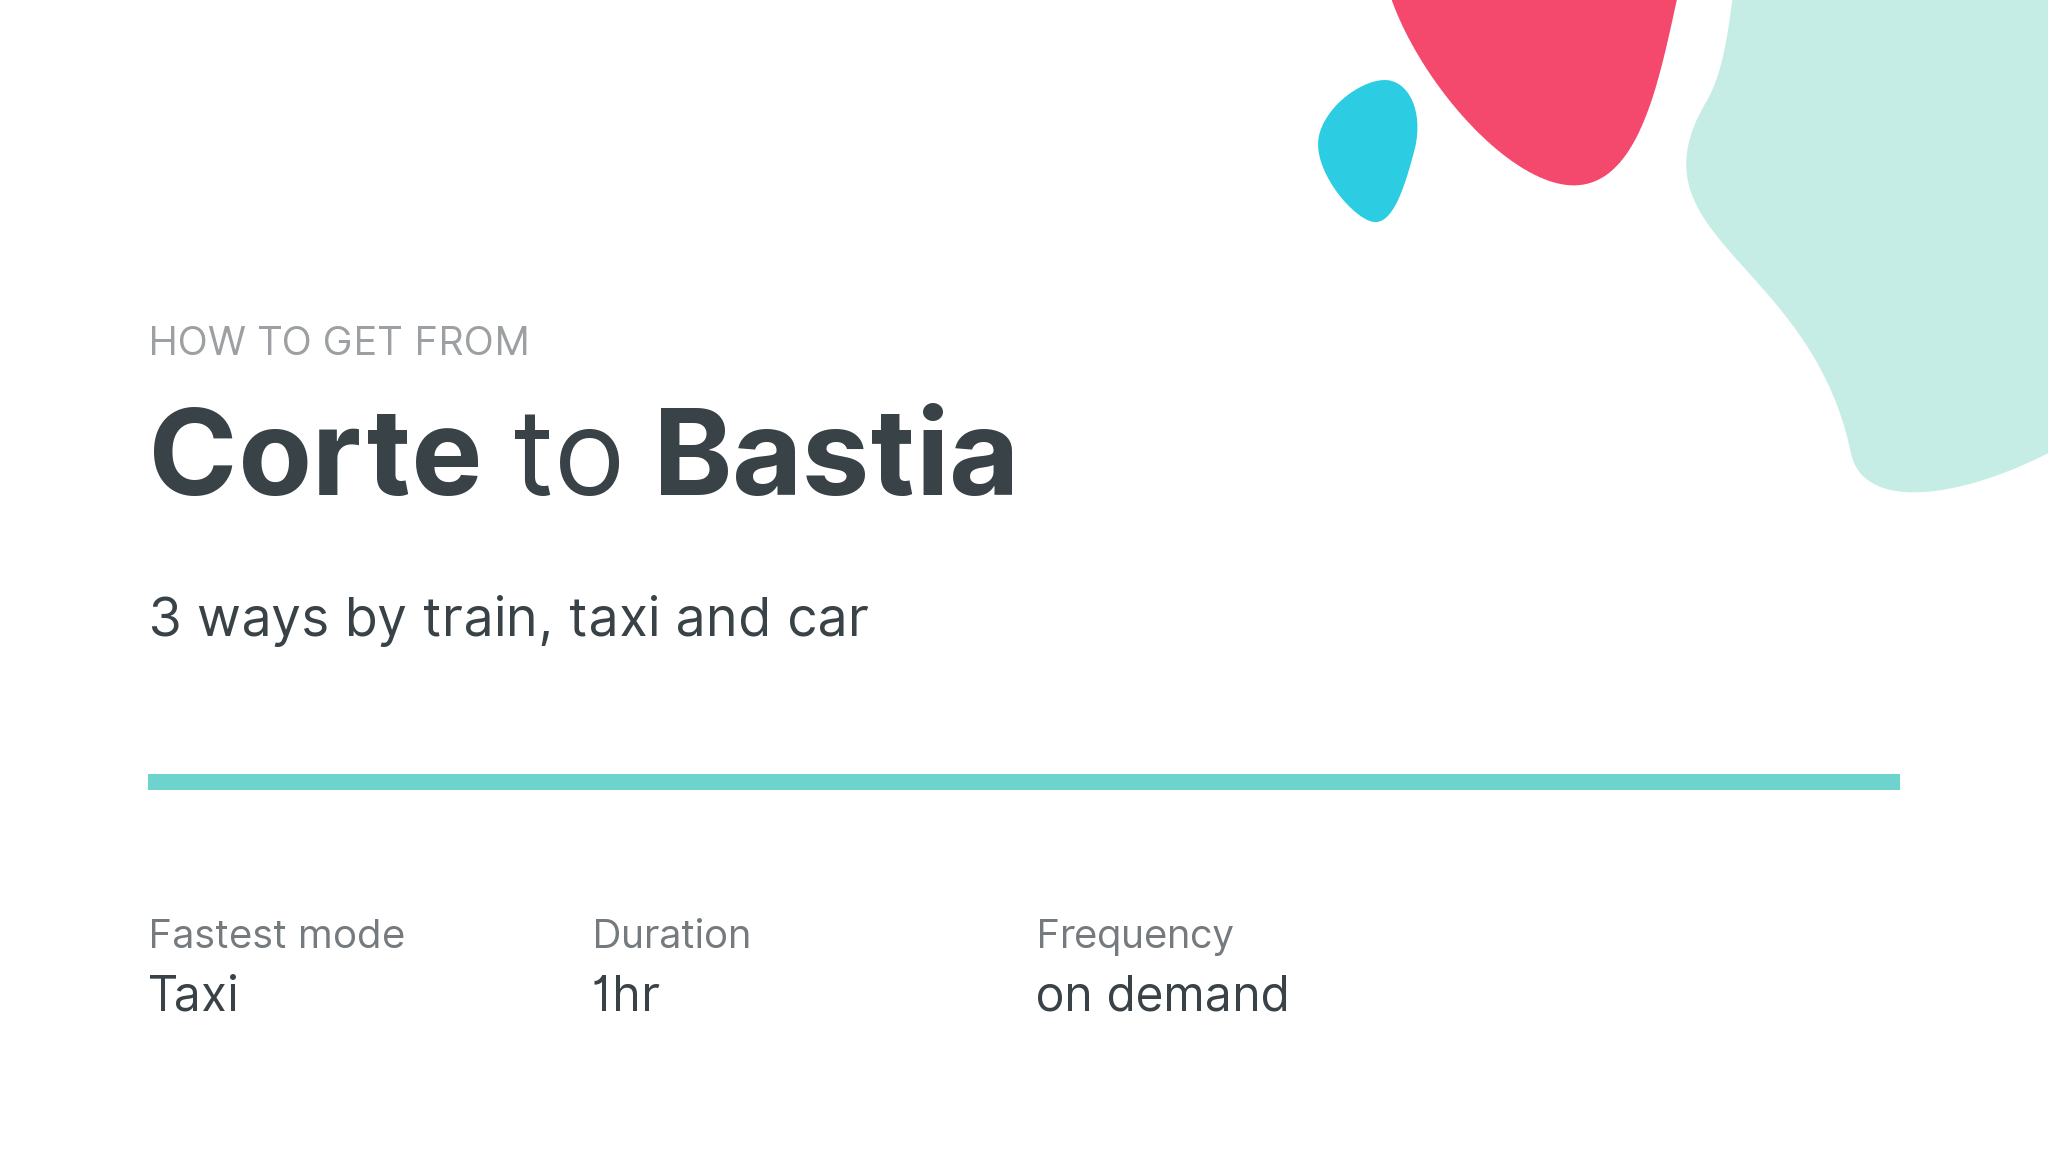 How do I get from Corte to Bastia